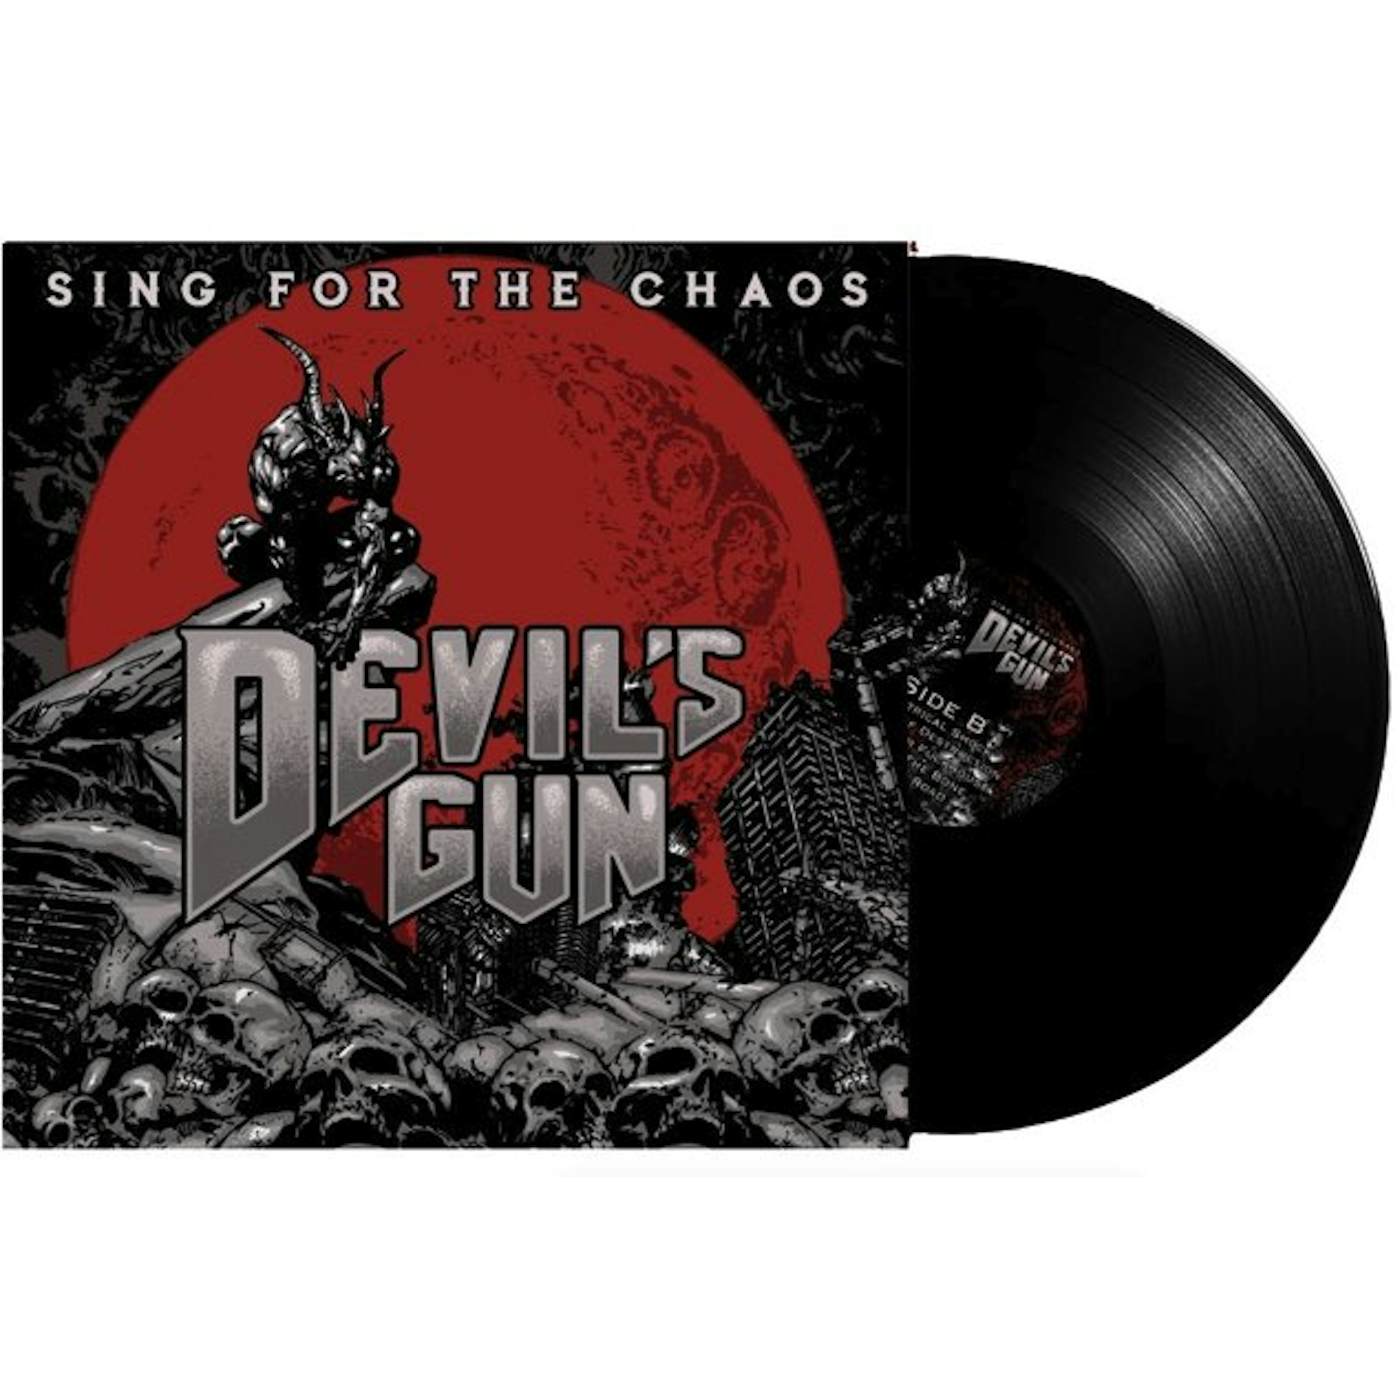 Devil's Gun Sing For The Chaos Vinyl Record